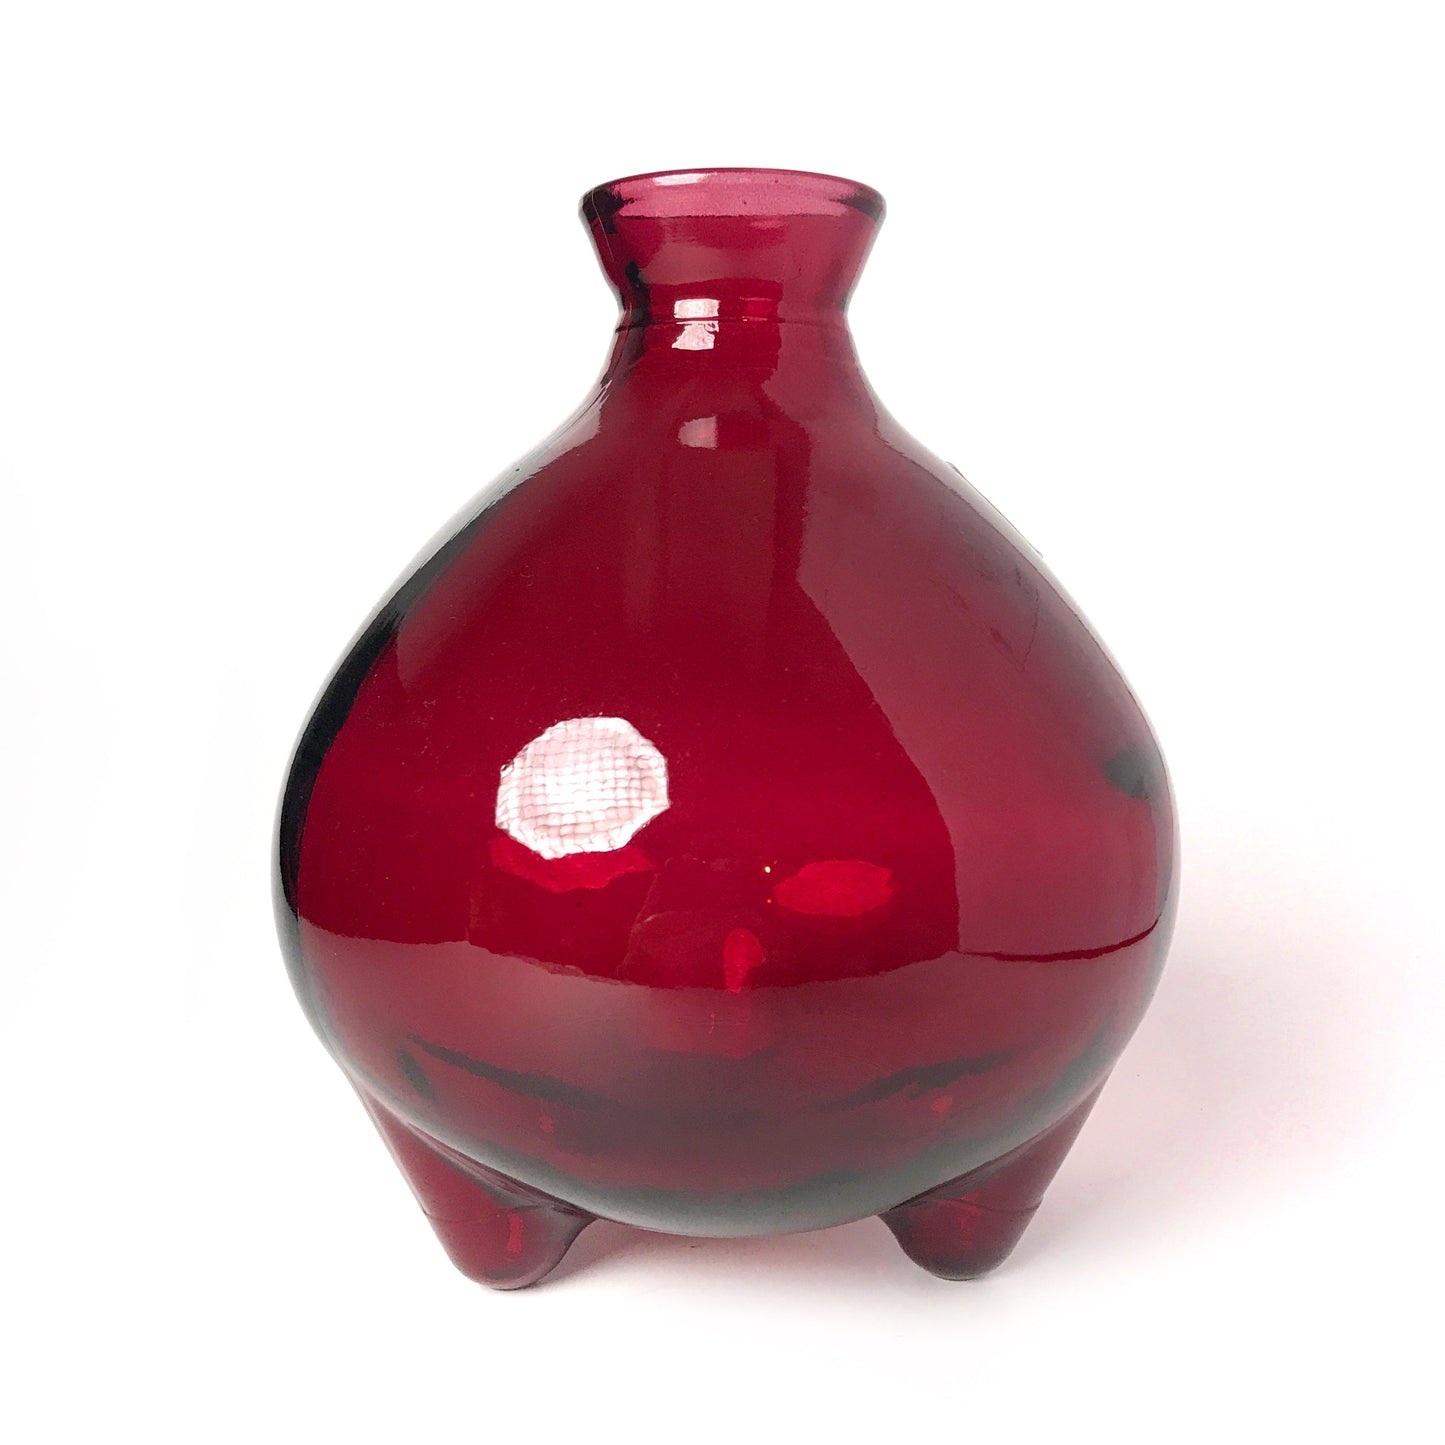 Patas Glass Vase Small | Deep Blue